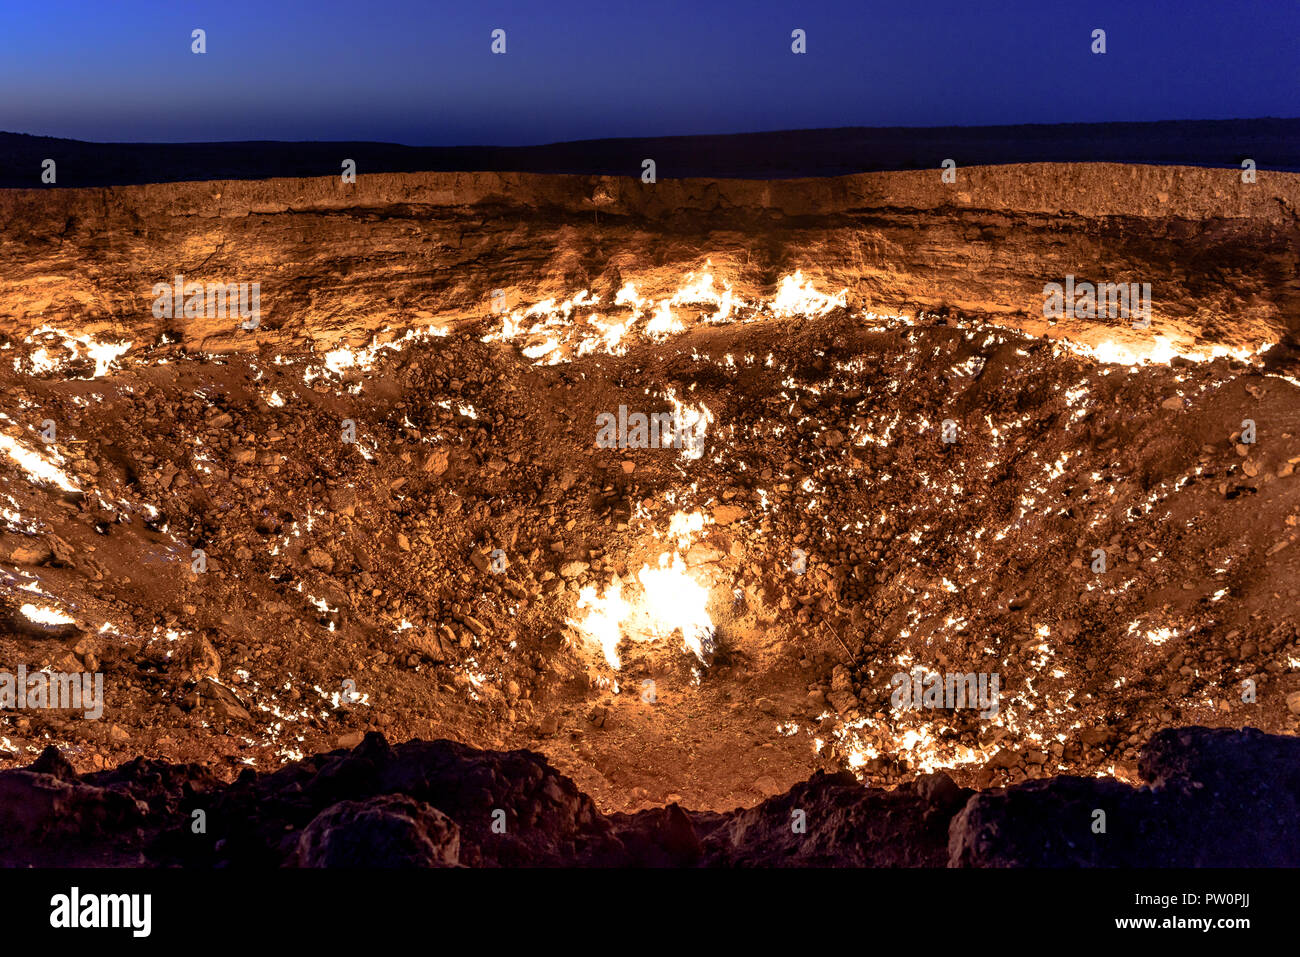 Turkmenistan gates of hell gas crater fire in Karakum desert near Darvaza. Burning methane gas crater in Derweze in Karakum desert. Door to hell Stock Photo